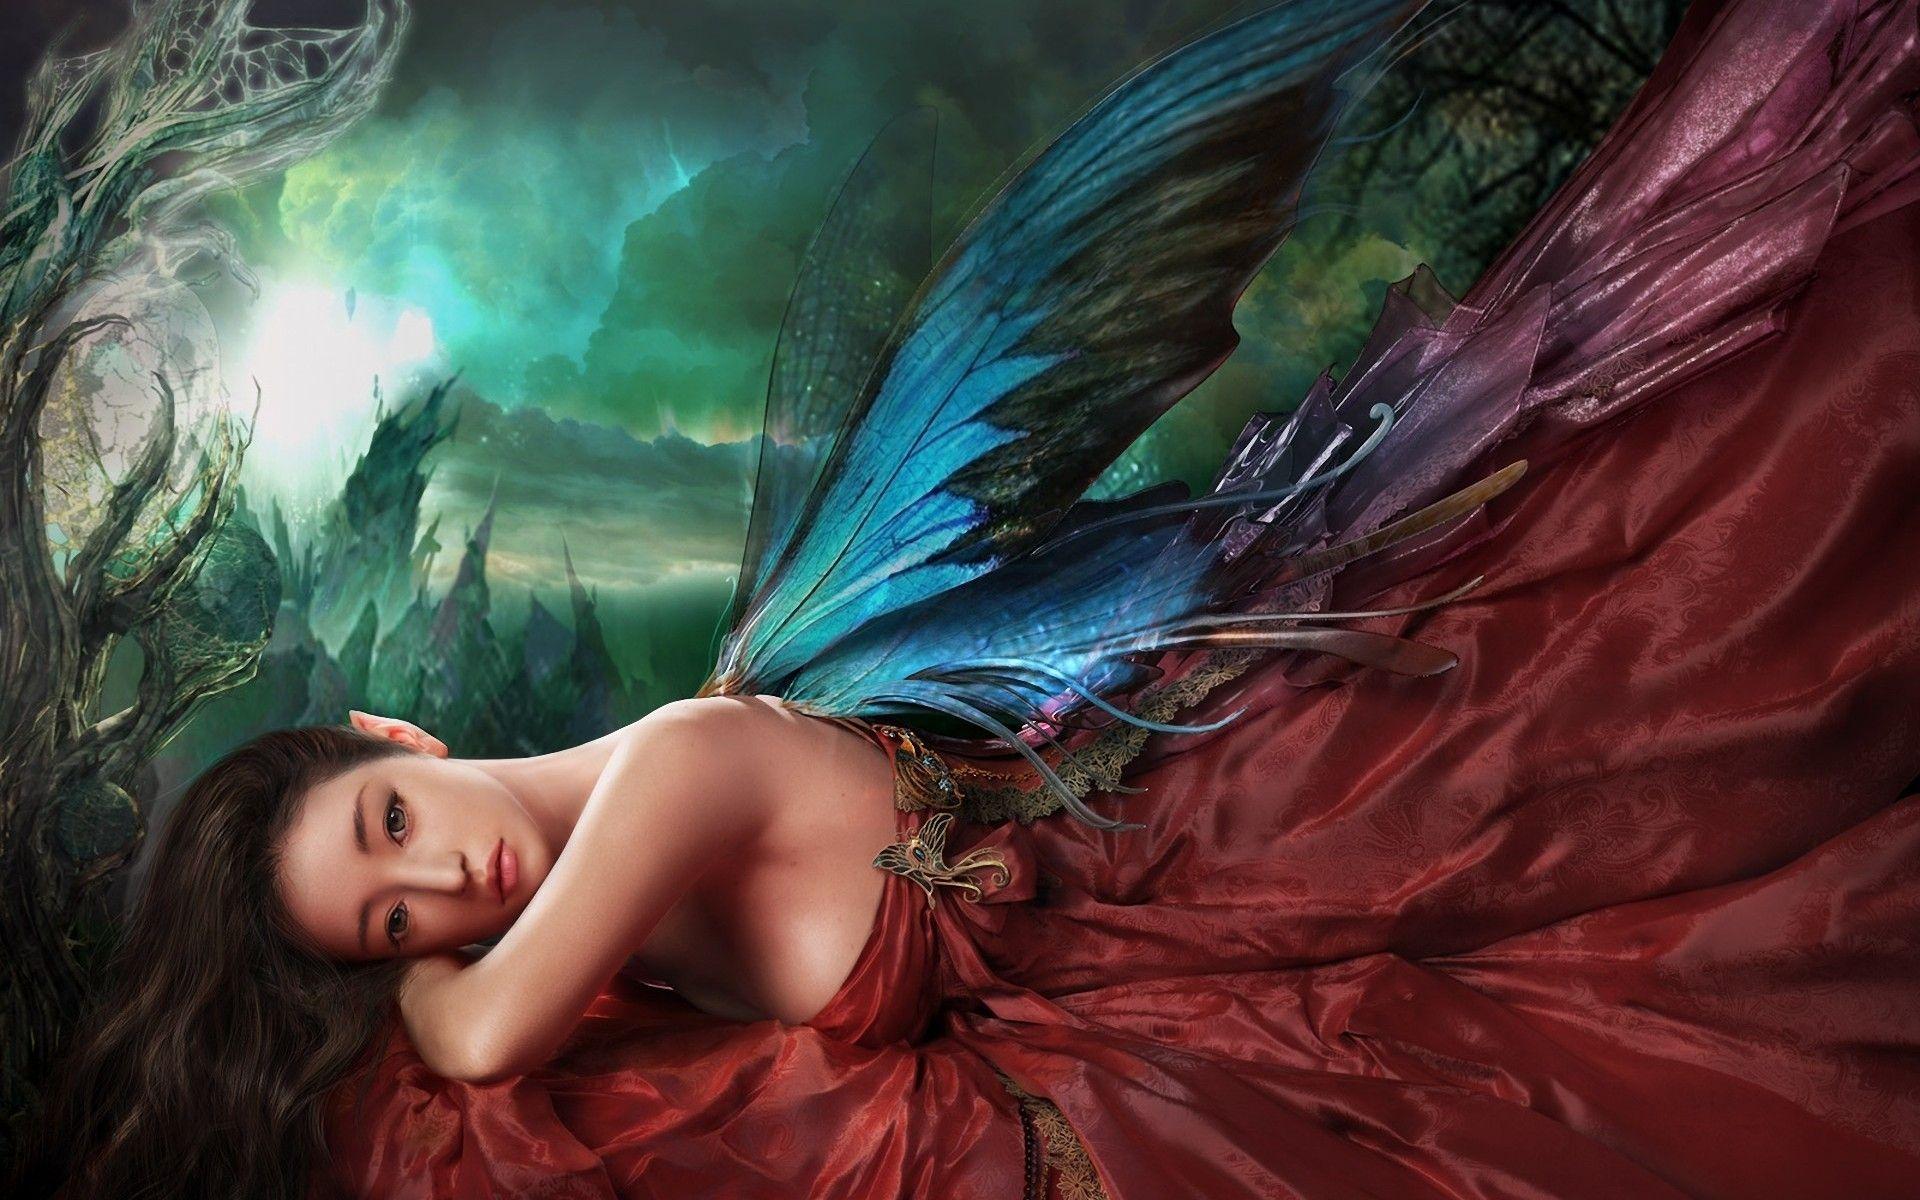 angels image. Description: Download Beautiful angel